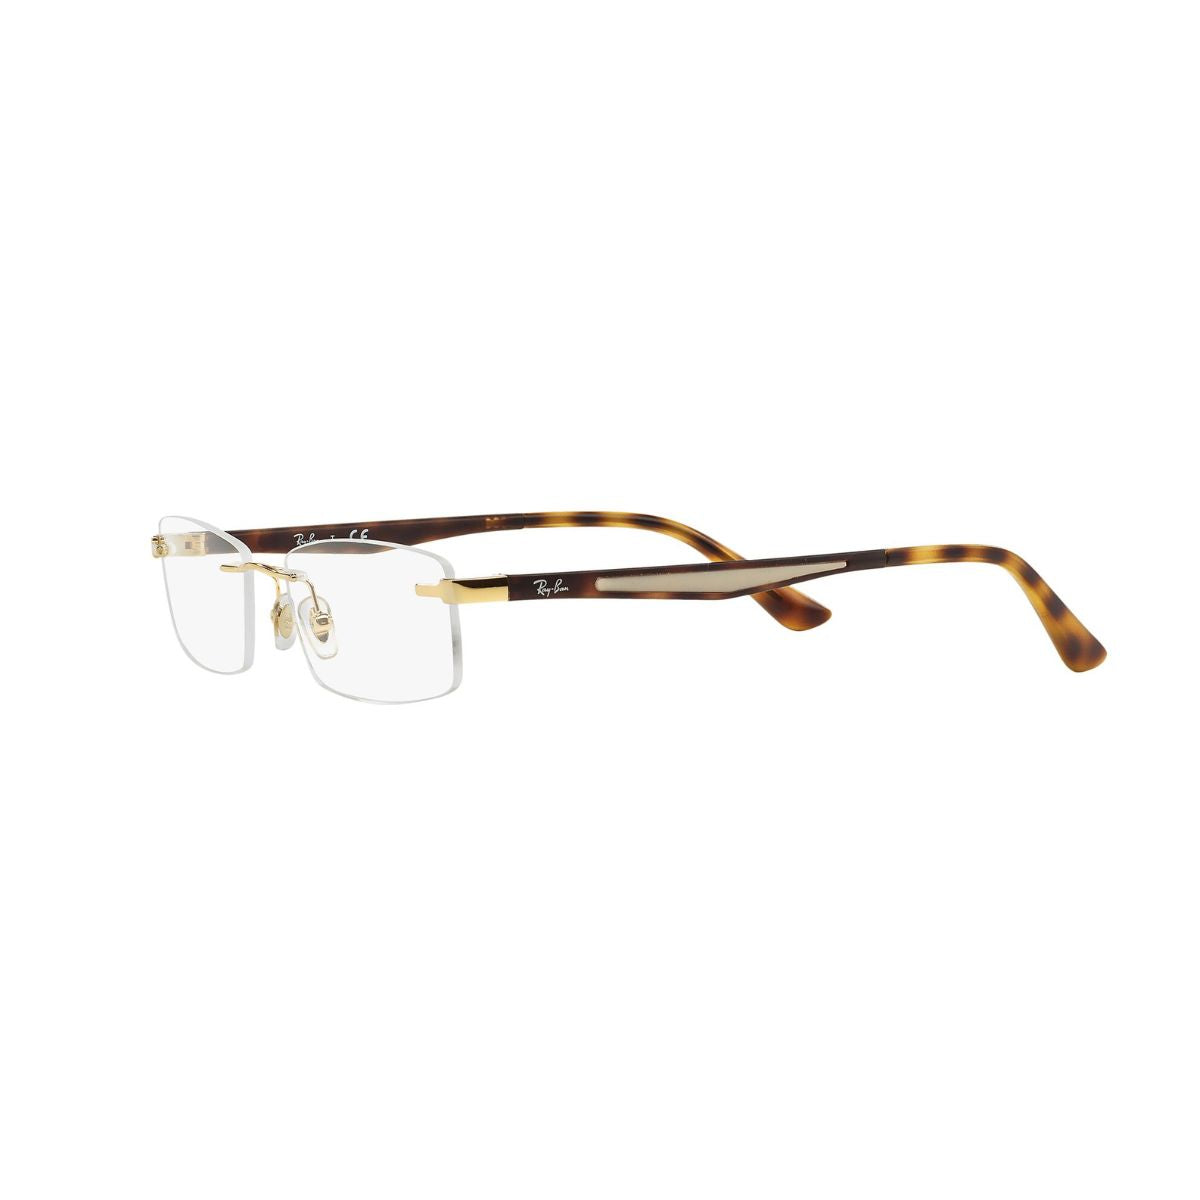 " best Rayban 6326I 2500 spectacle frame & eyeglasses frame for men's and women'sonline at optorium"